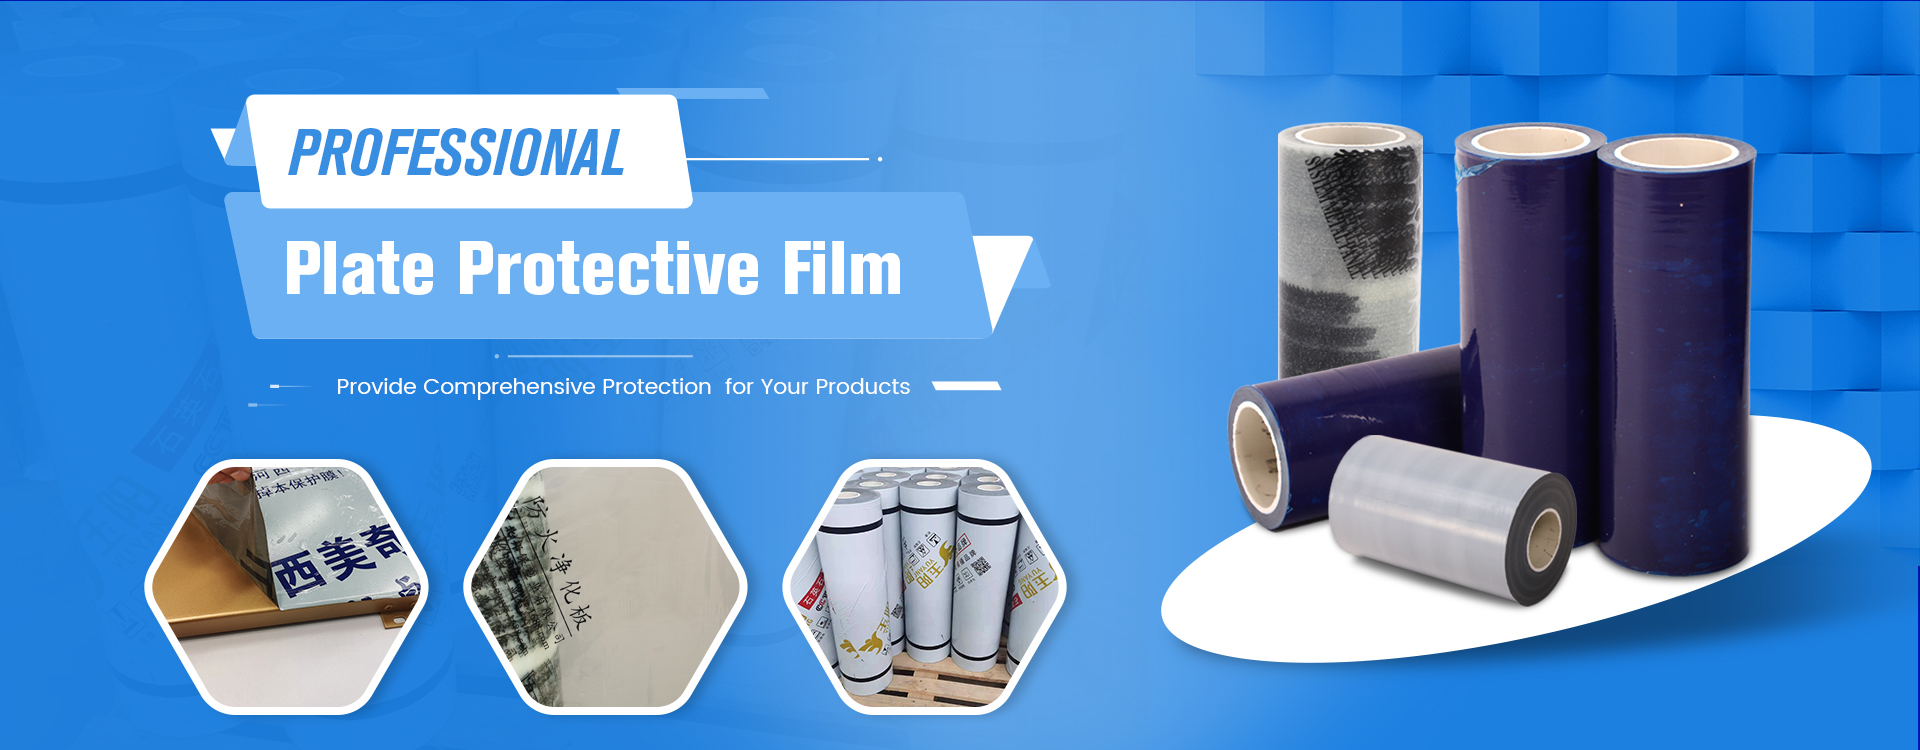 PVC Profile Protective Film